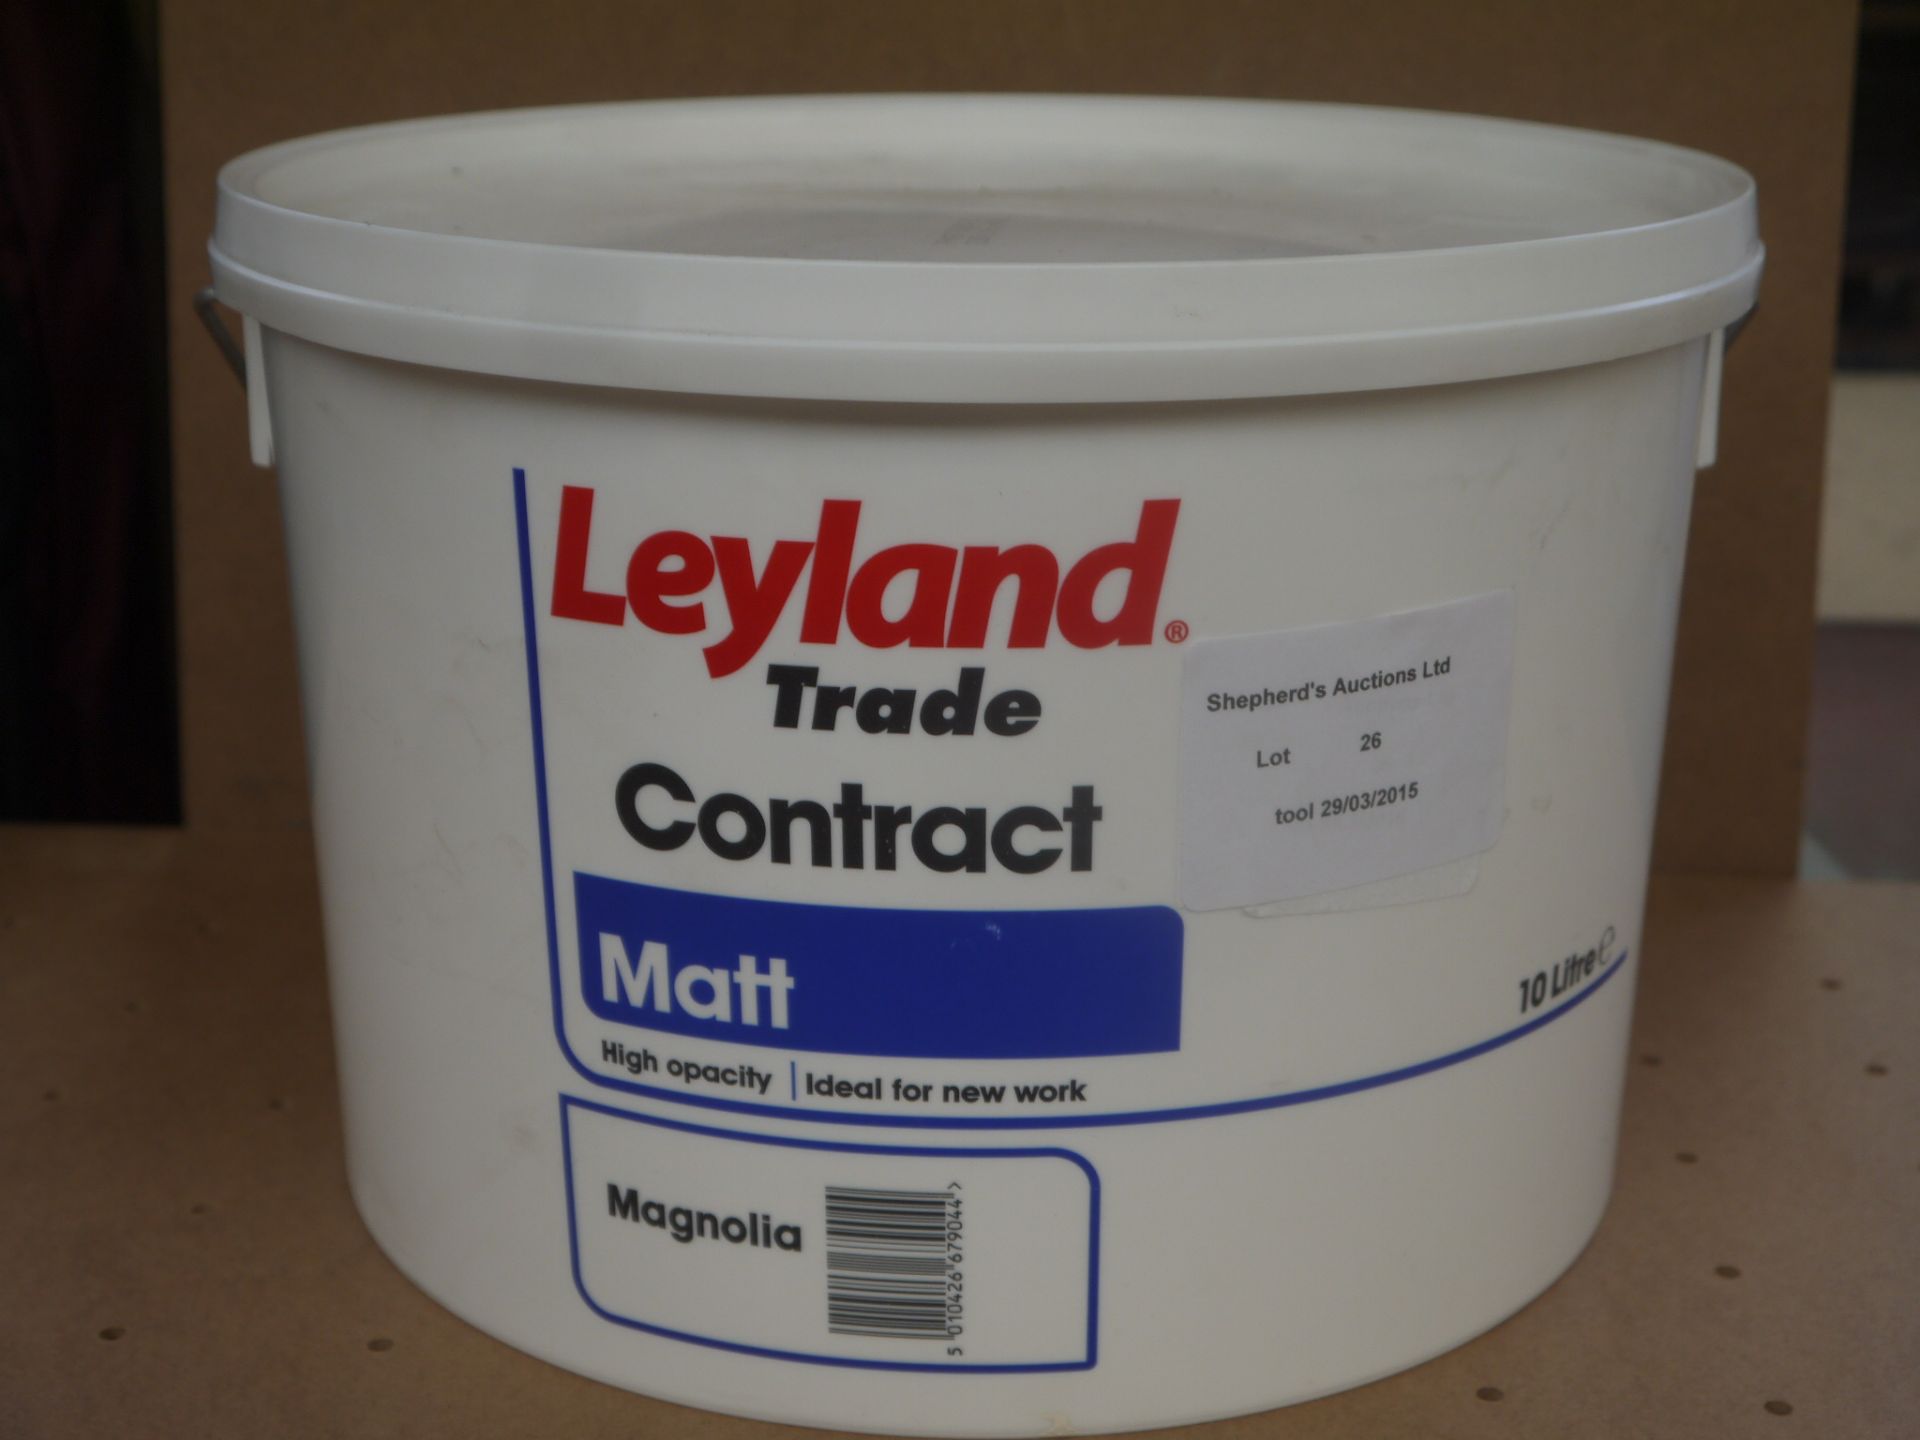 Leyland Trade Contract Matt Magnolia Paint, 10 litre. New.